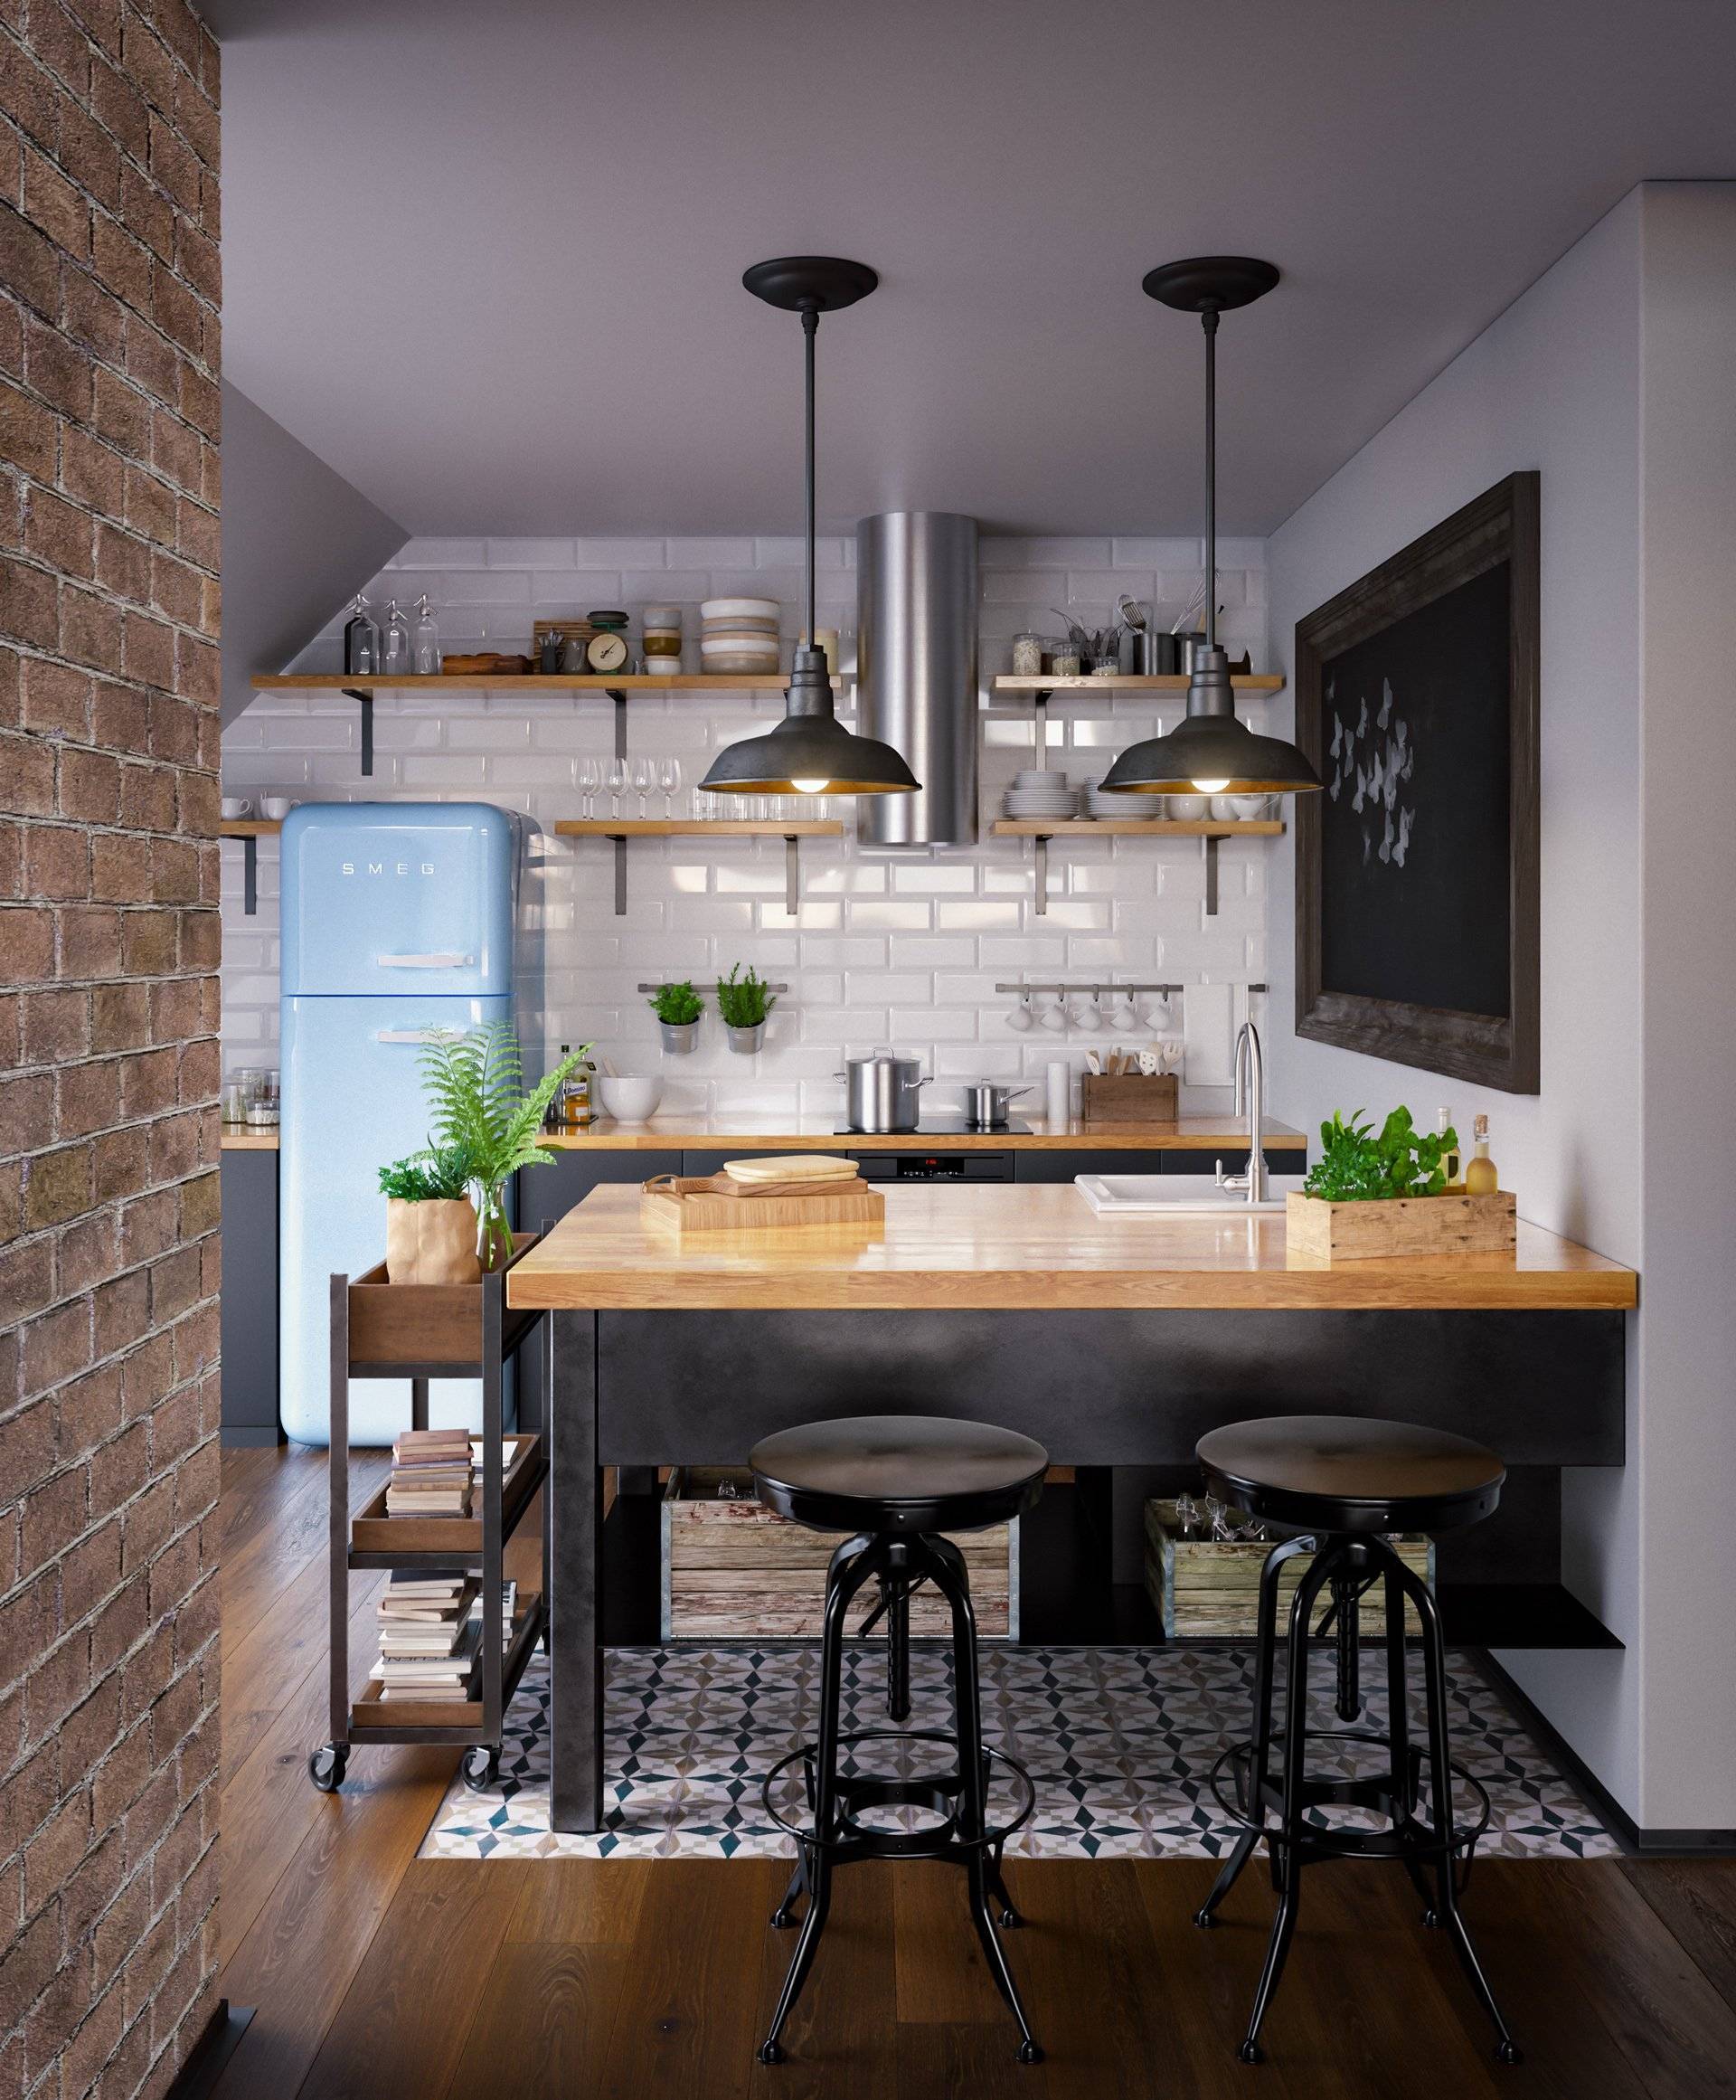 Дизайн кухни в стиле лофт: 67 фото в интерьере квартиры и дома